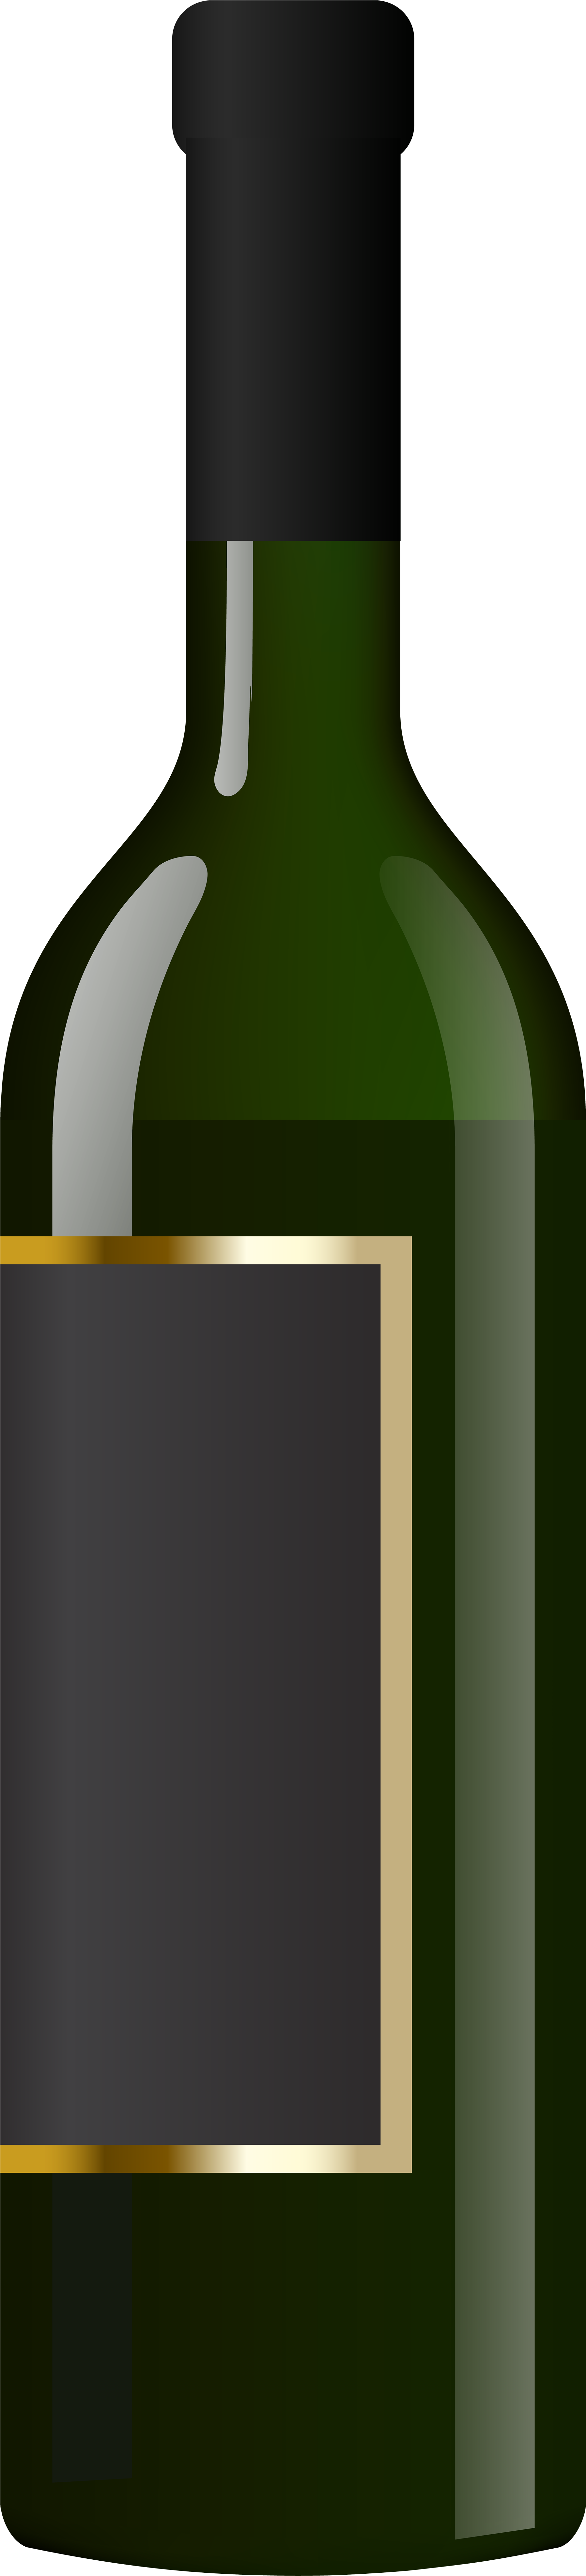 Wine Bottle Transparent Png Clip Art Image - Transparent Wine Bottle Clip Art (1950x8000), Png Download